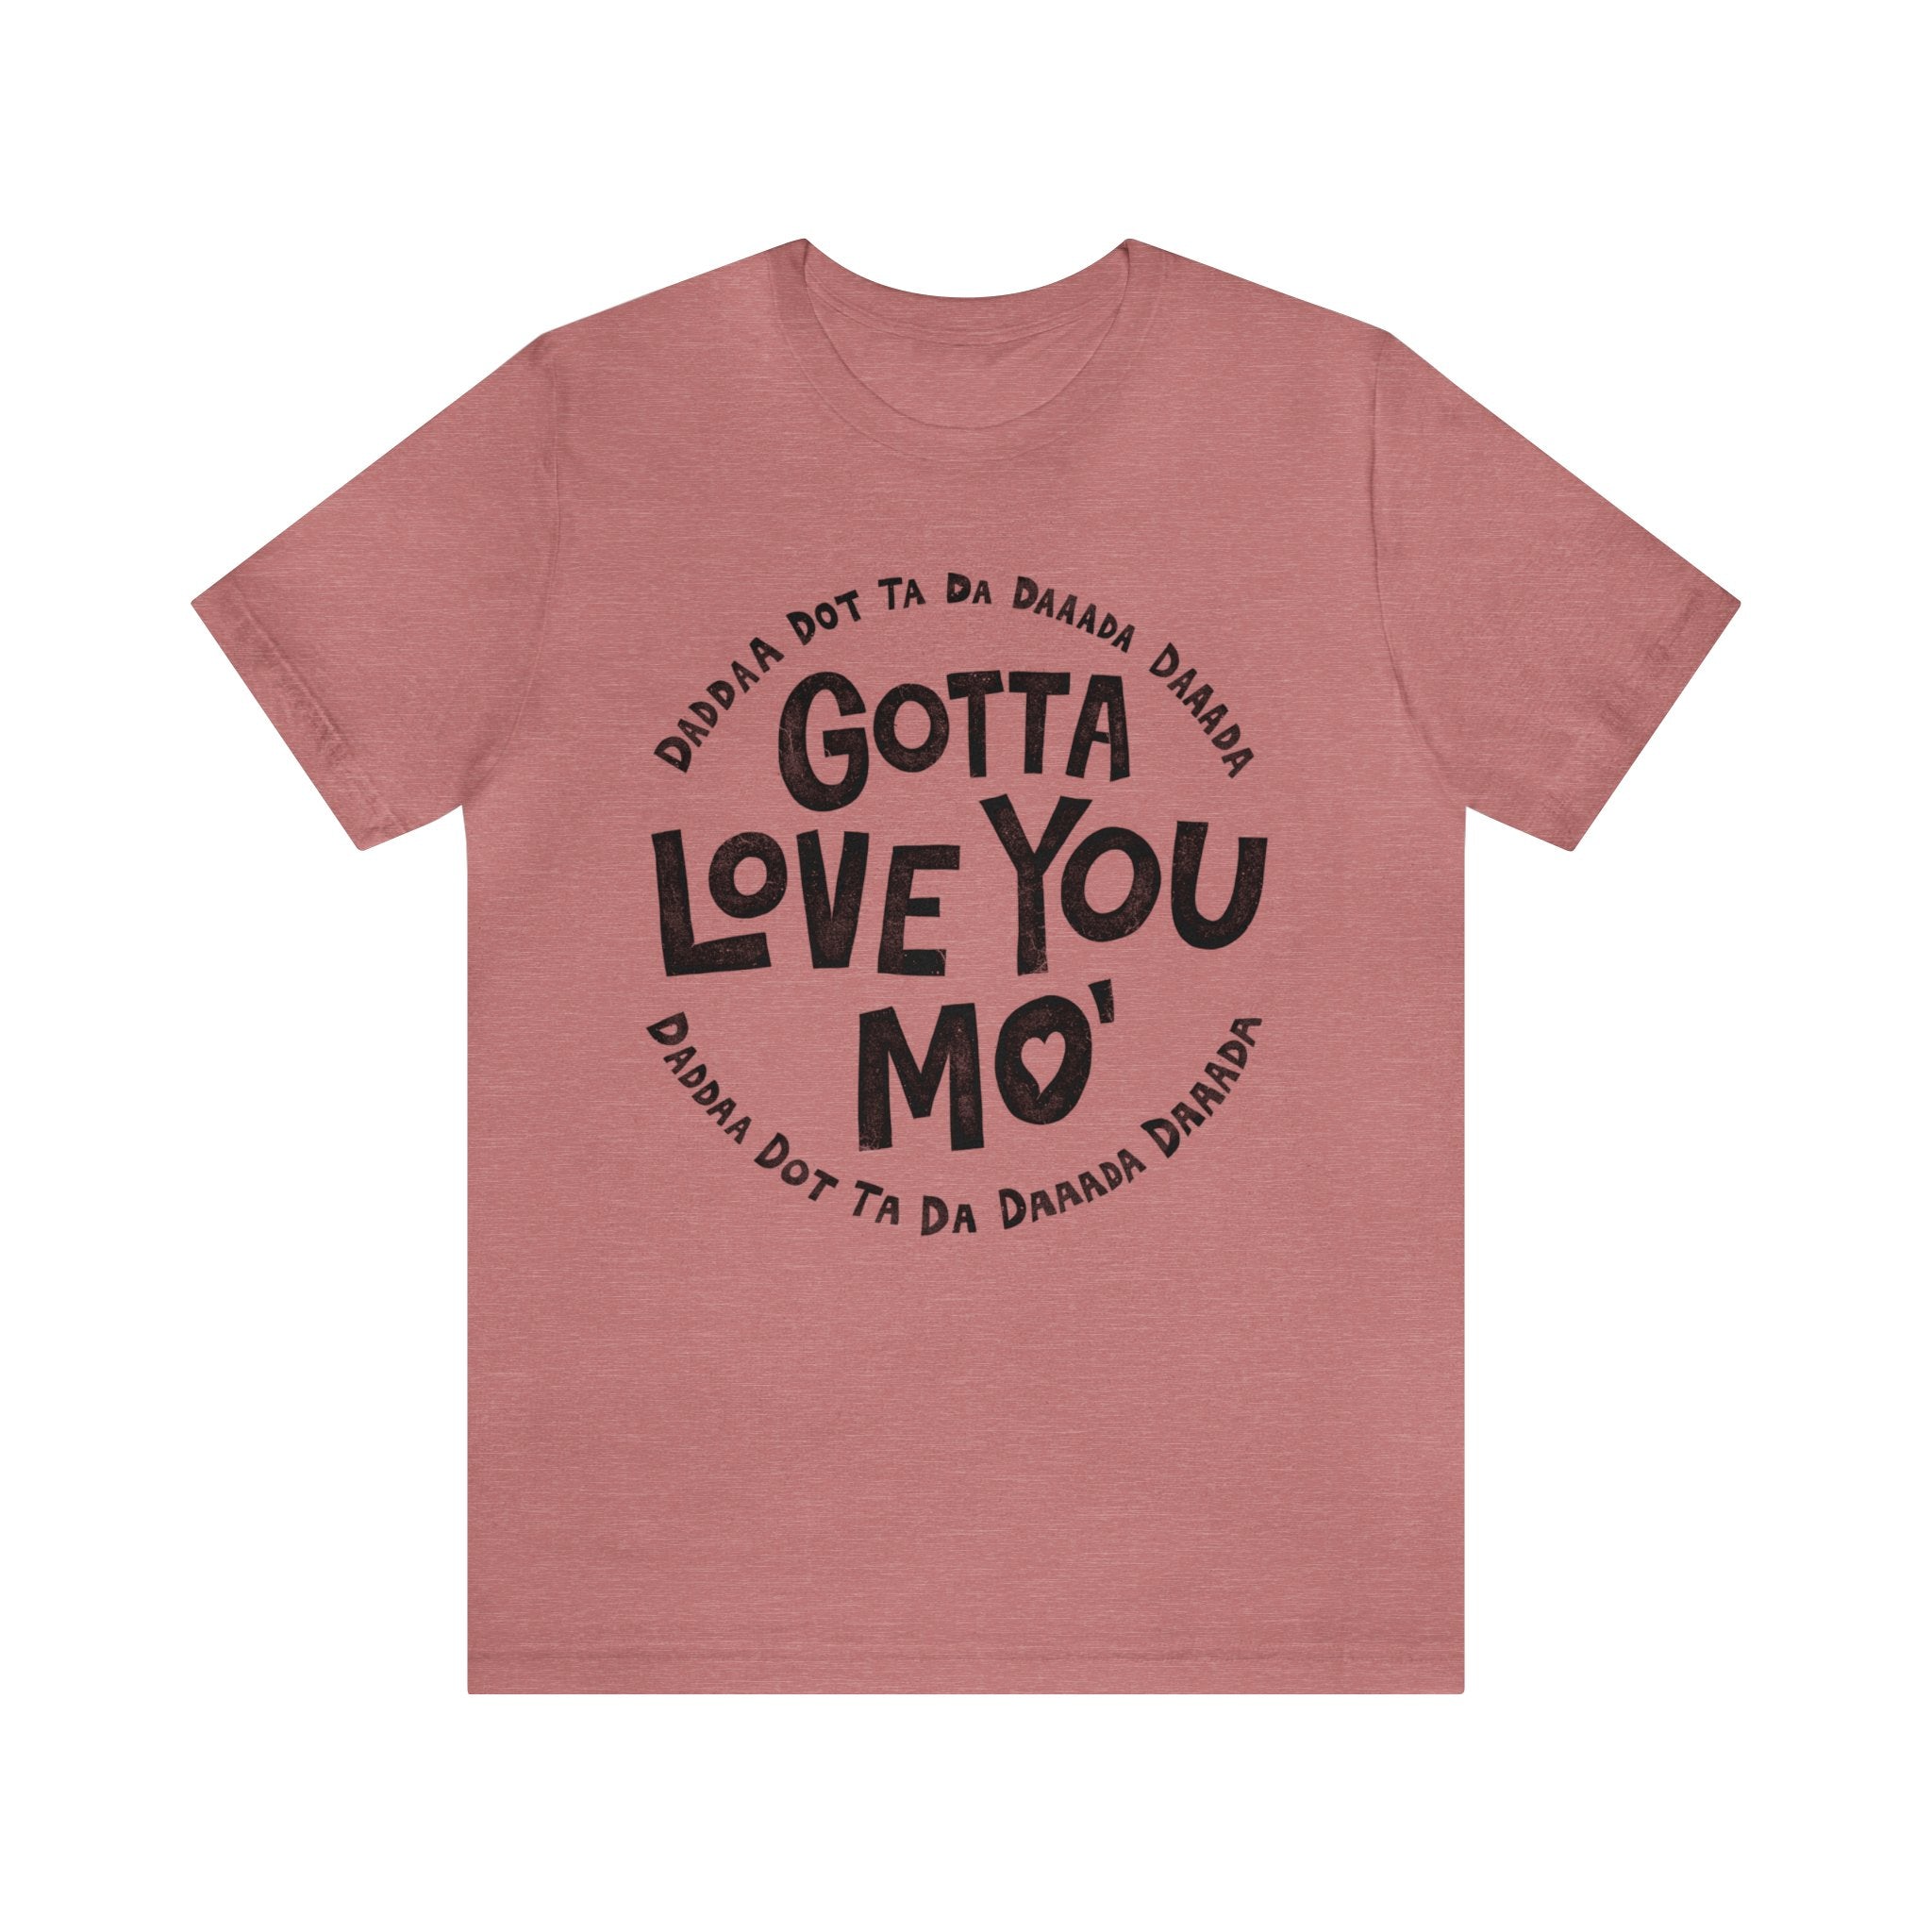 Gotta Love You Mo' - Dirty Coast Press